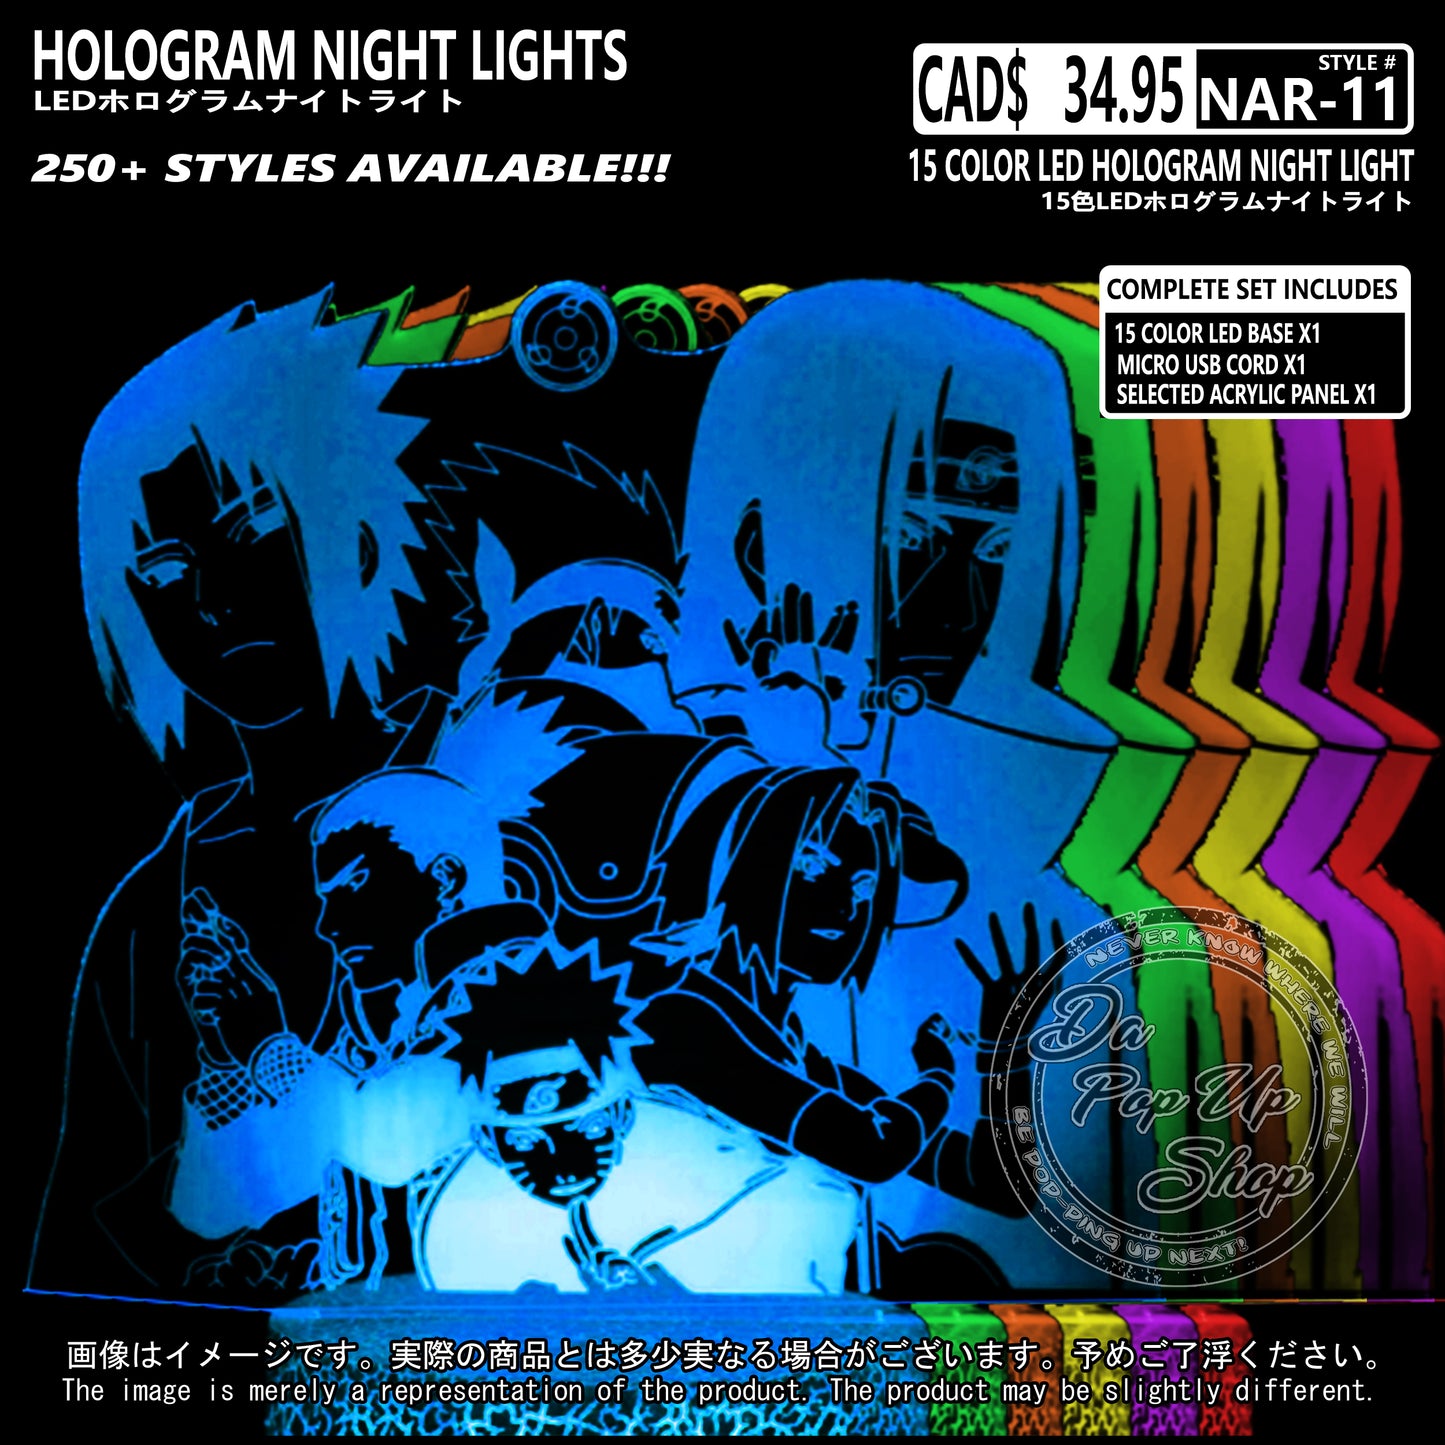 (NAR-11) Naruto Hologram LED Night Light